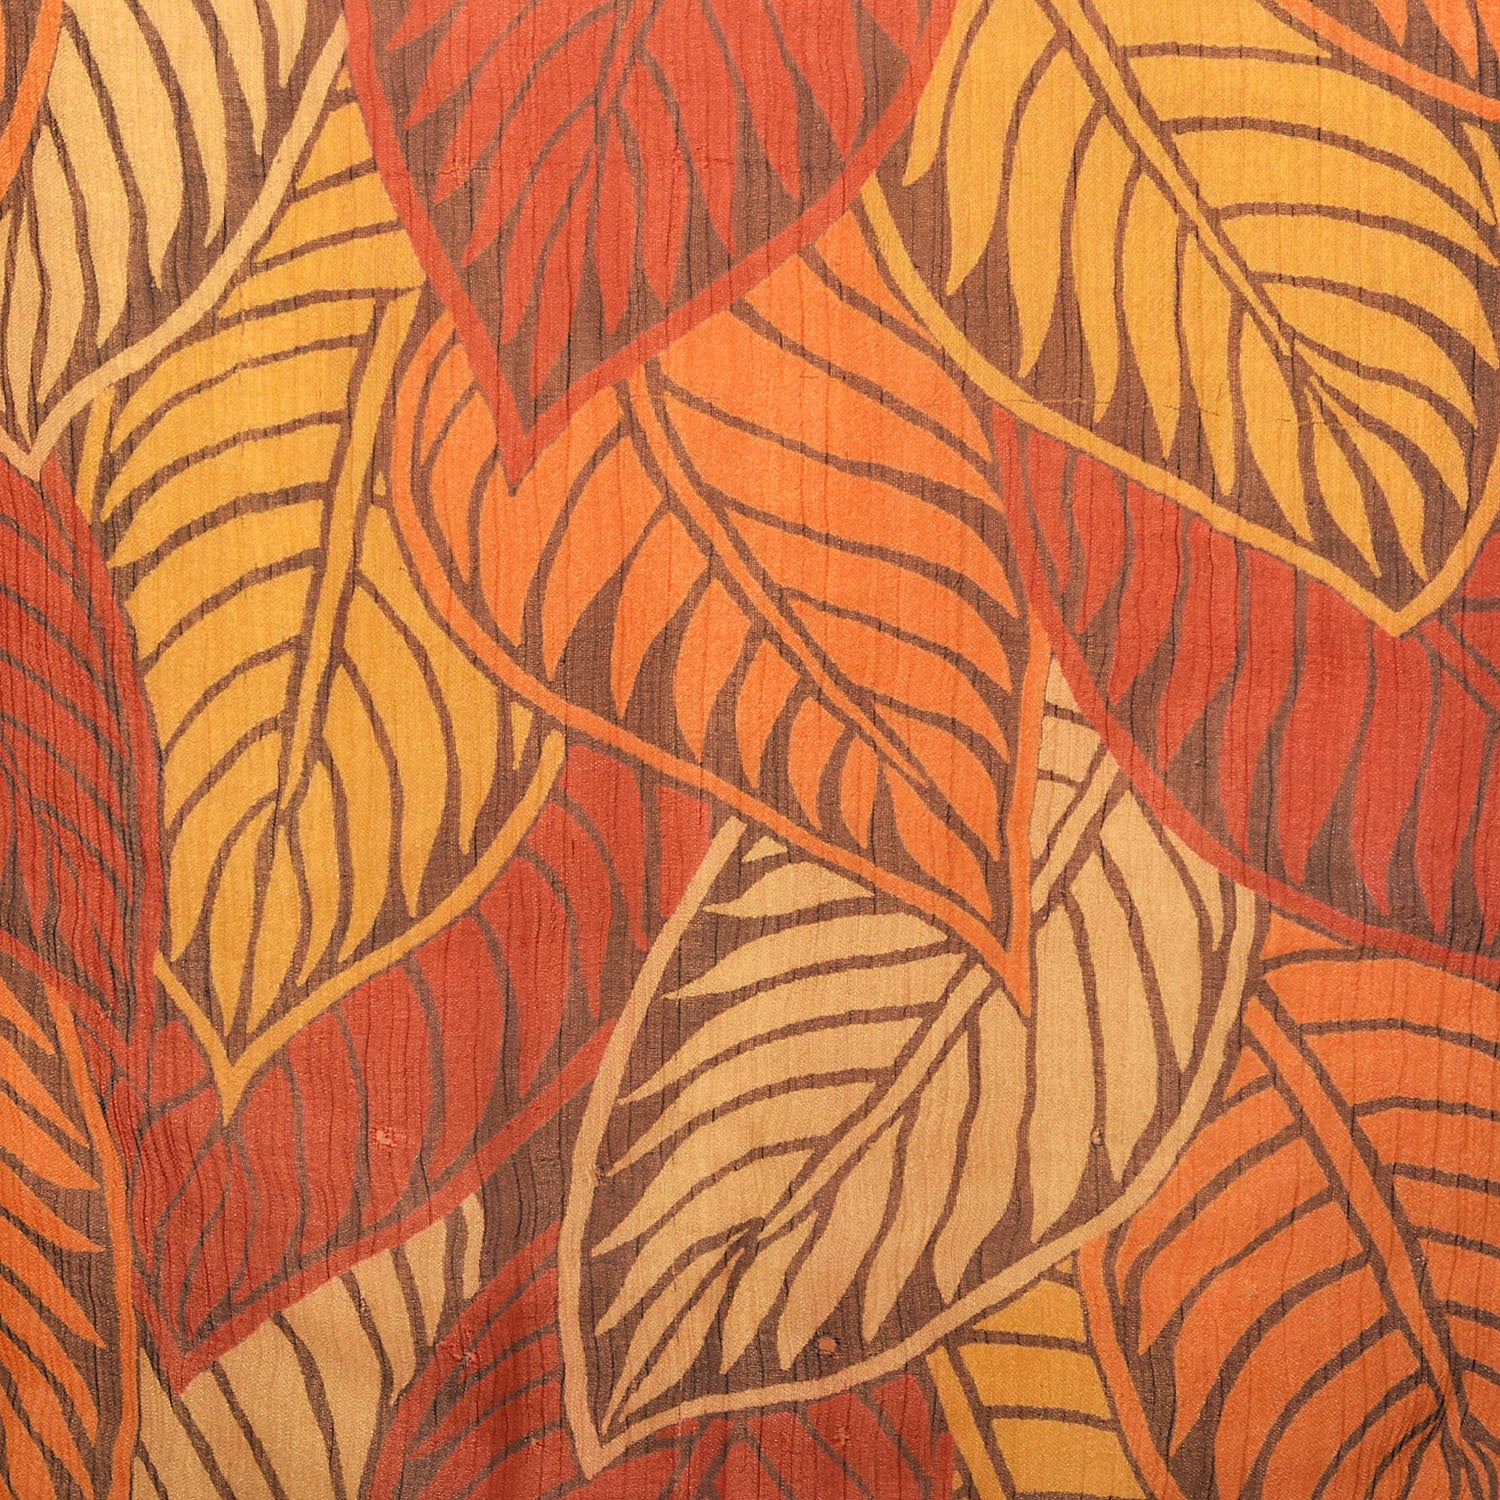 Small 1920s Silk Crepe Print Dress Novelty Leaf Print Flowy Handkerchief Hem Drop Waist